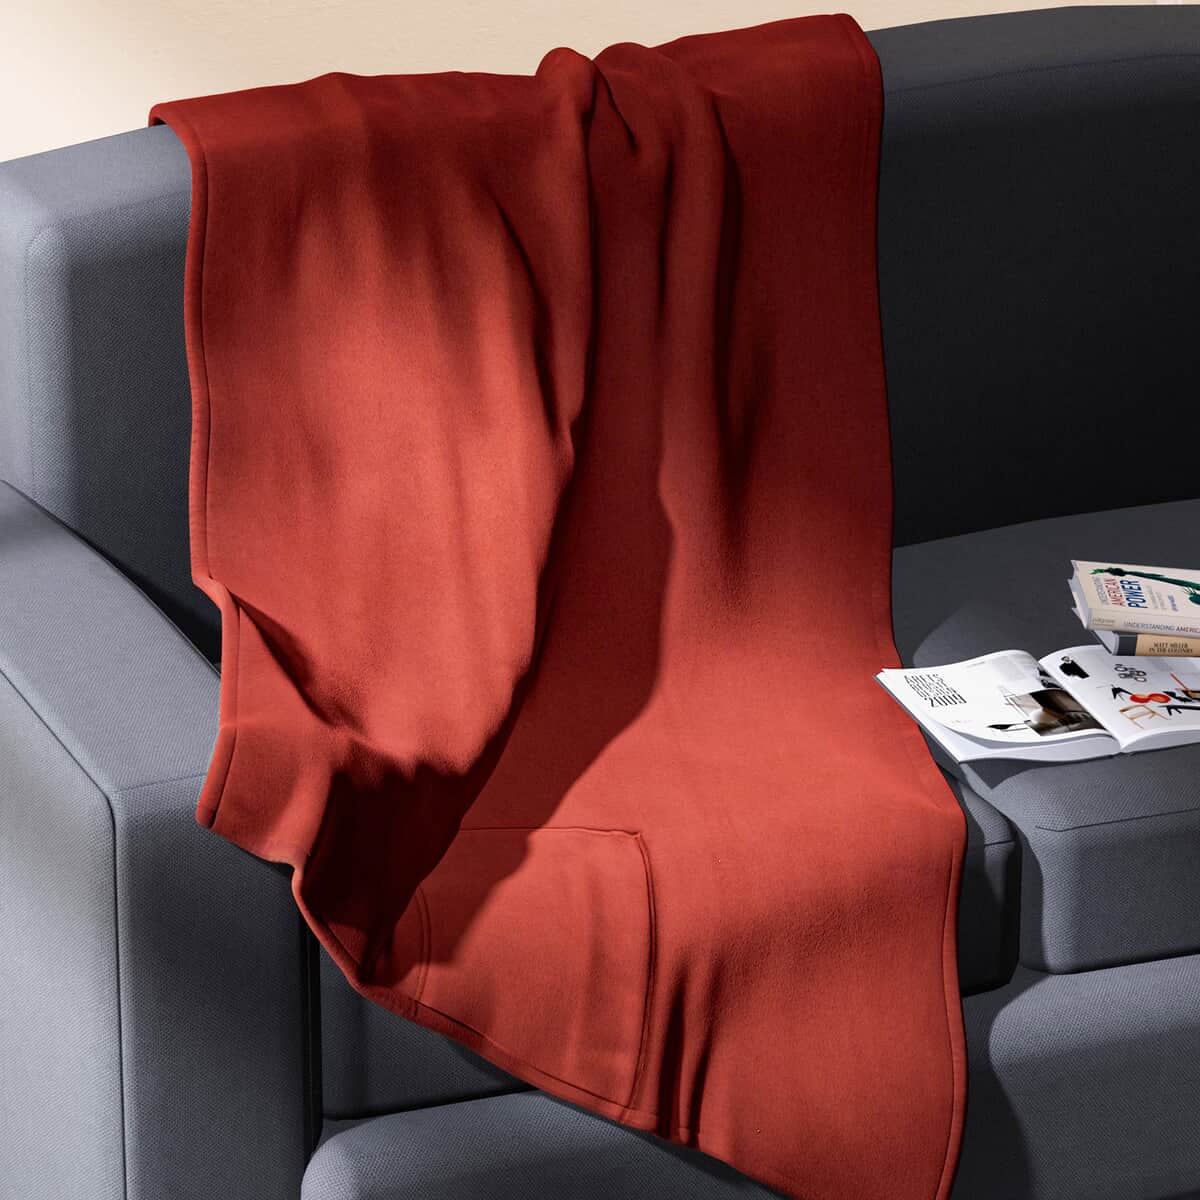 HOMESMART 2 in 1 Red Solid Fleece Travel Blanket (51"X67") with Folded Storage Pocket (Microfiber) image number 1